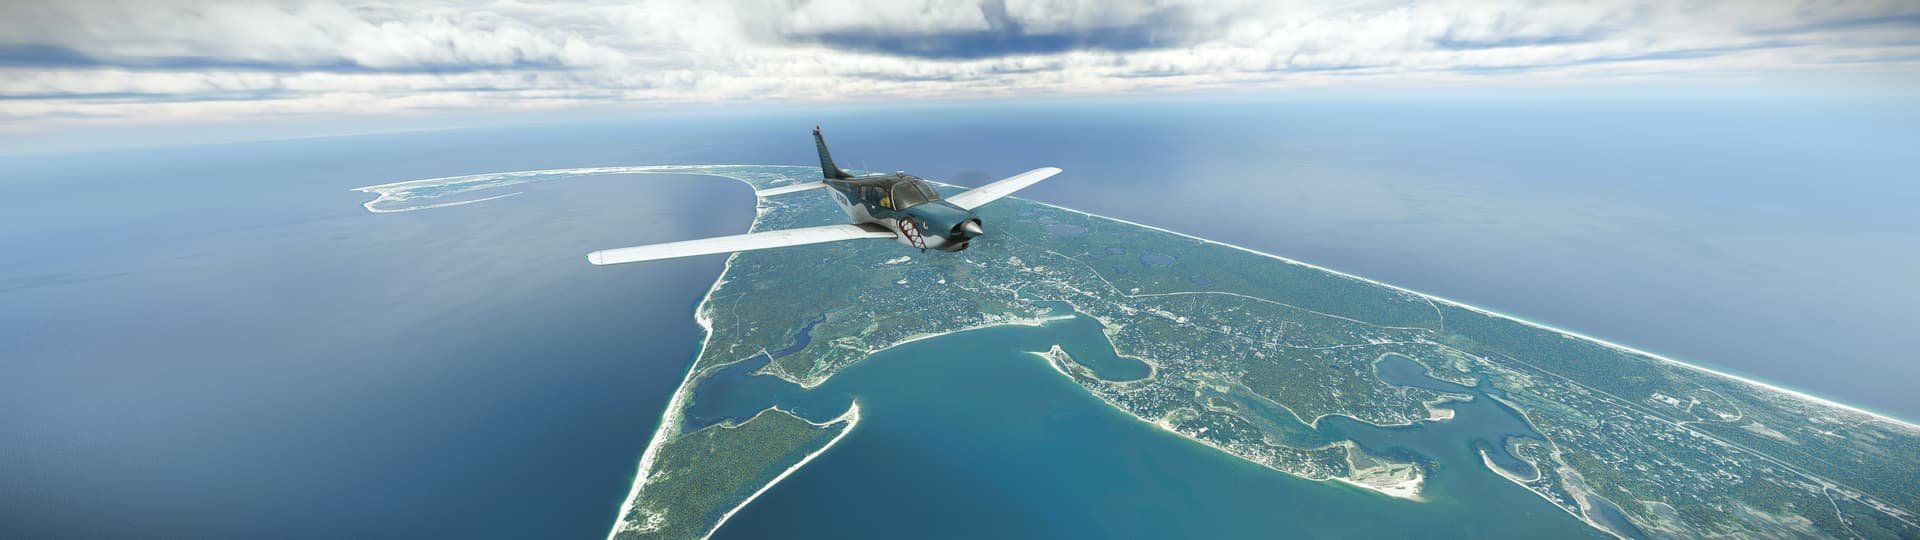 http://image.noelshack.com/fichiers/2023/02/6/1673715103-microsoft-flight-simulator-screenshot-2023-01-14-16-27-33-61.jpg